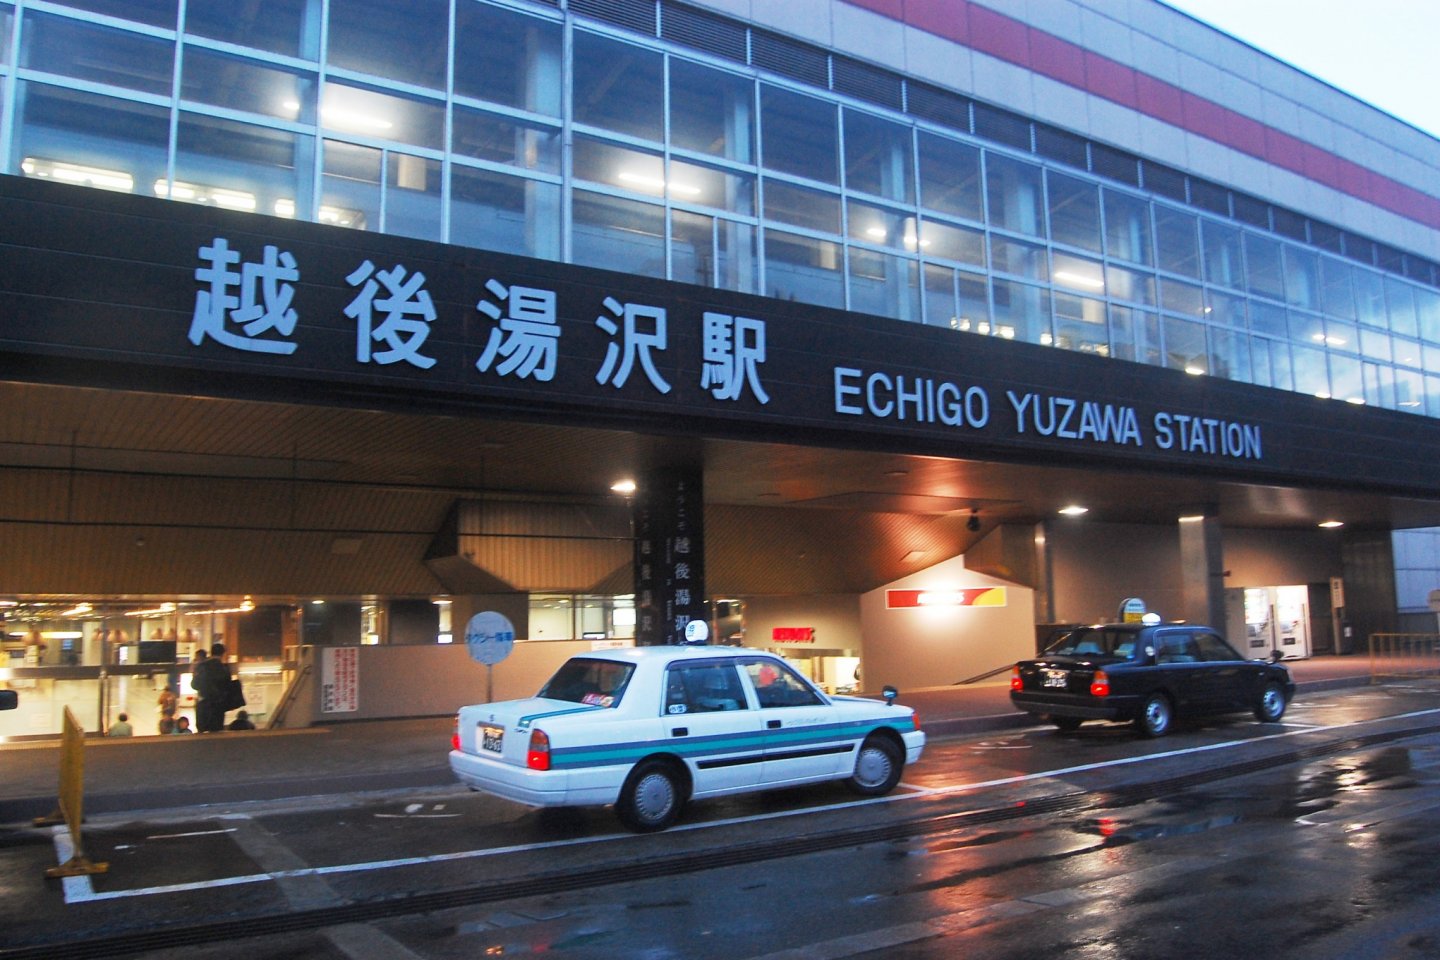 Selamat datang di Stasiun Echigo-Yuzawa, gerbang masuk menuju 'negeri bersalju'